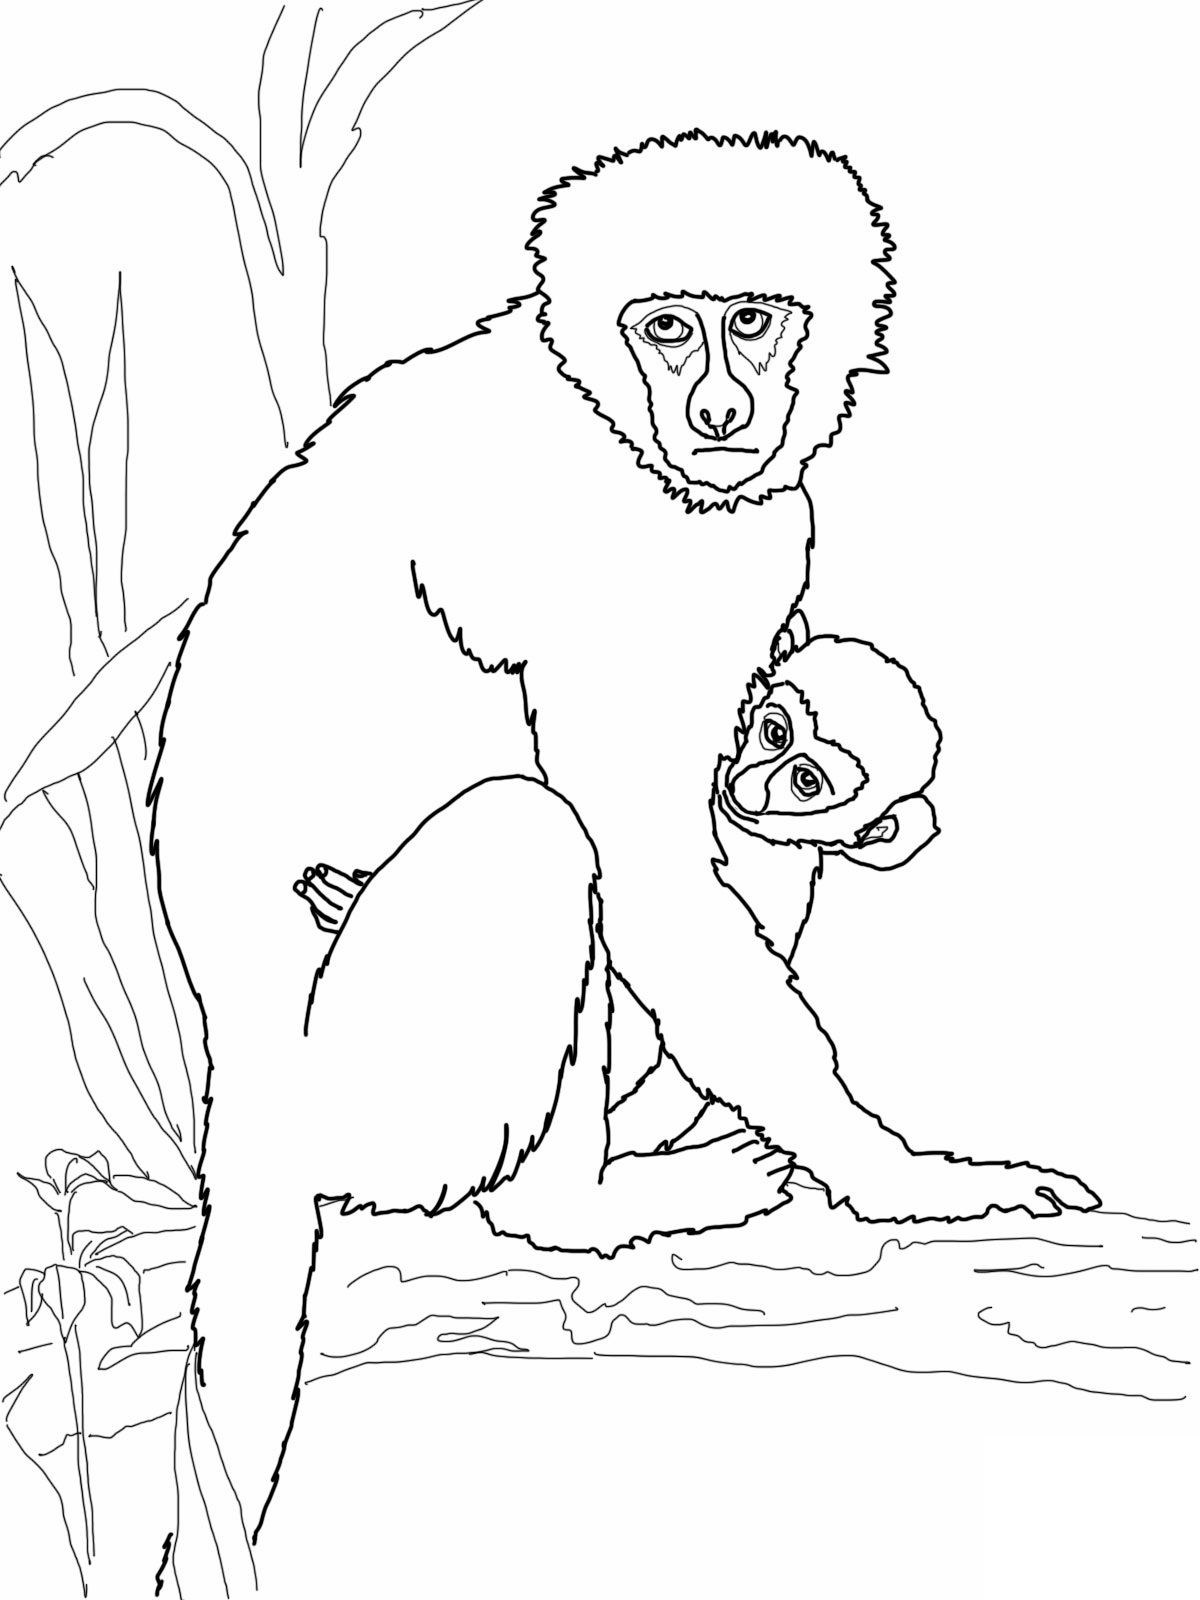 gambar sketsa monyet lucu